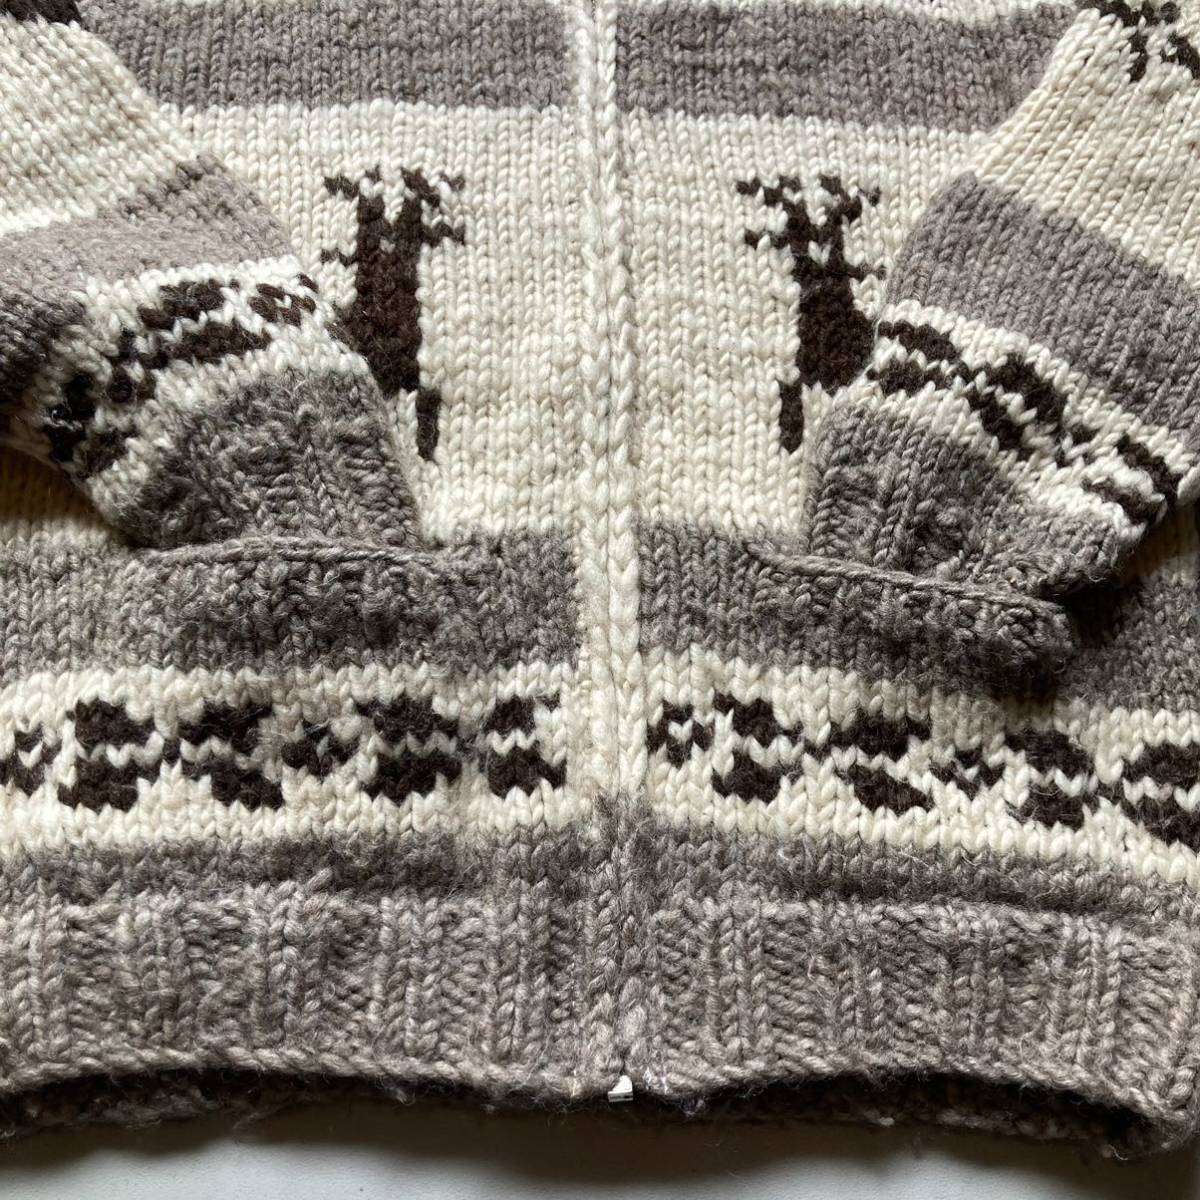 Canadian sweater cowichan sweater “wool100%” “hand knit in Canada” カナディアンセーター カウチンセーター ハンドニット カナダ製_画像5